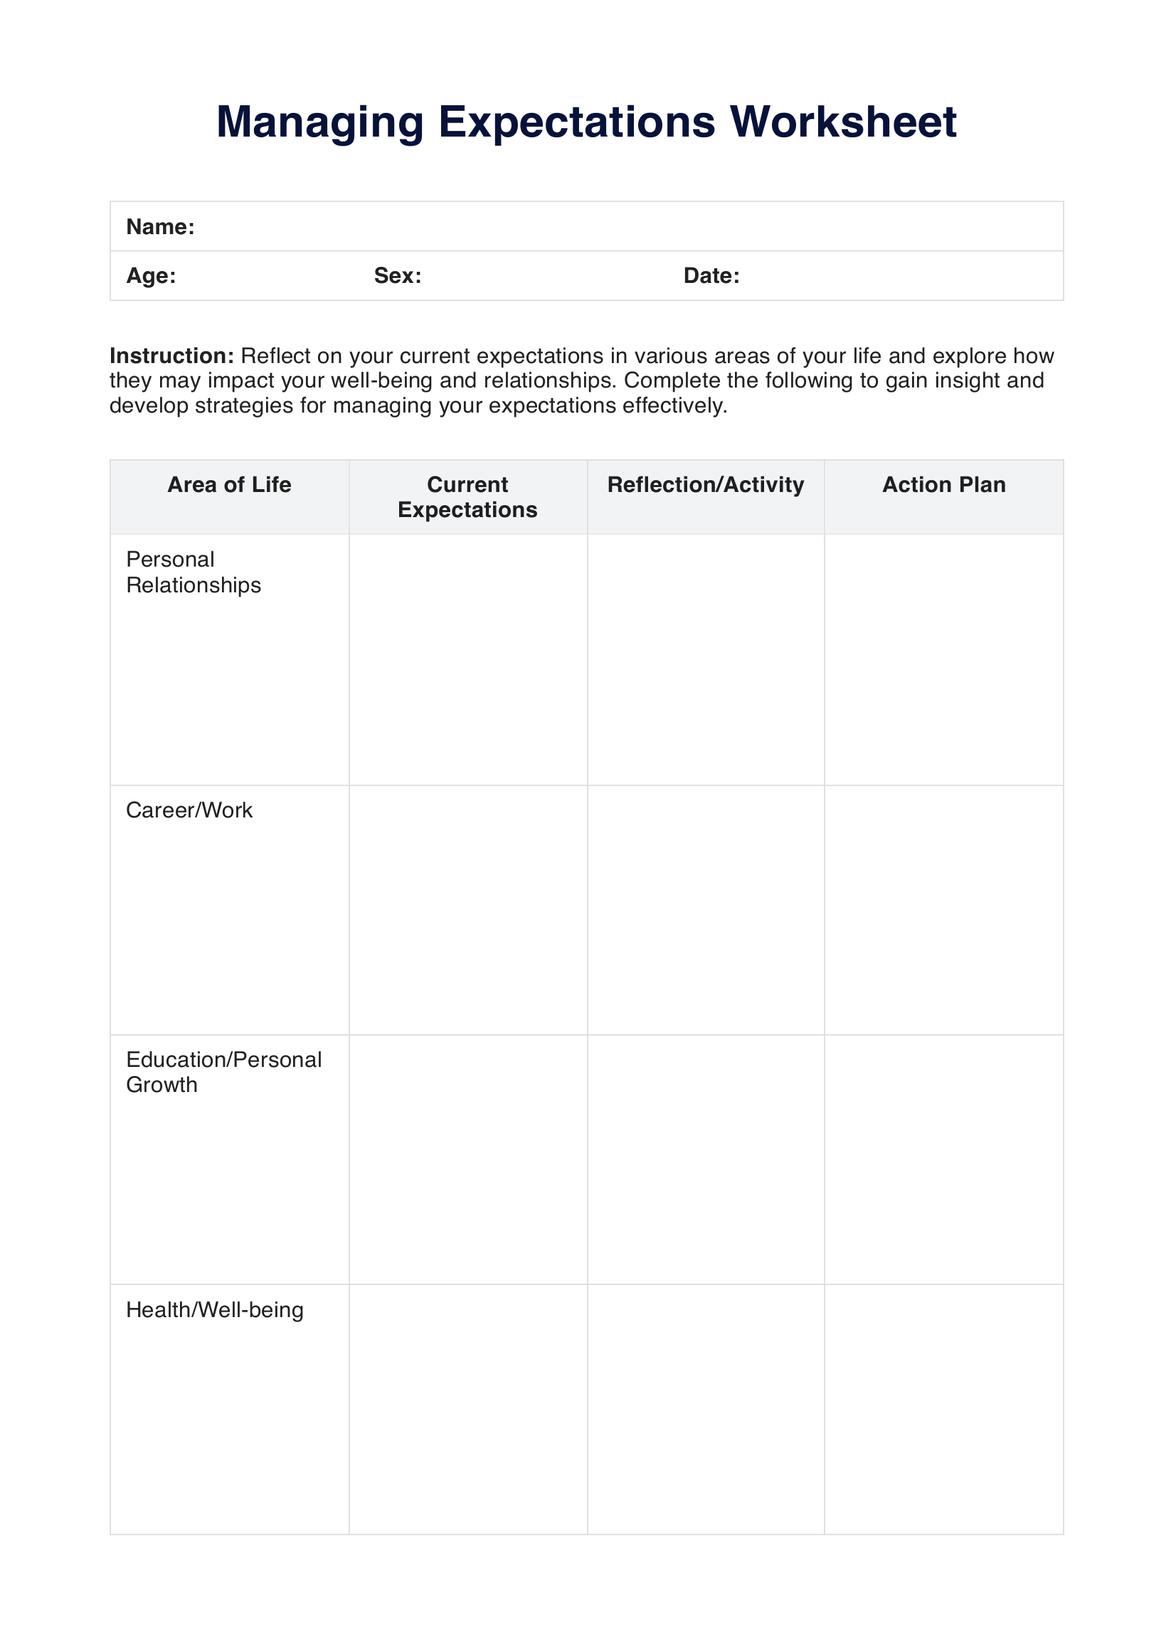 Managing Expectations Worksheet PDF Example